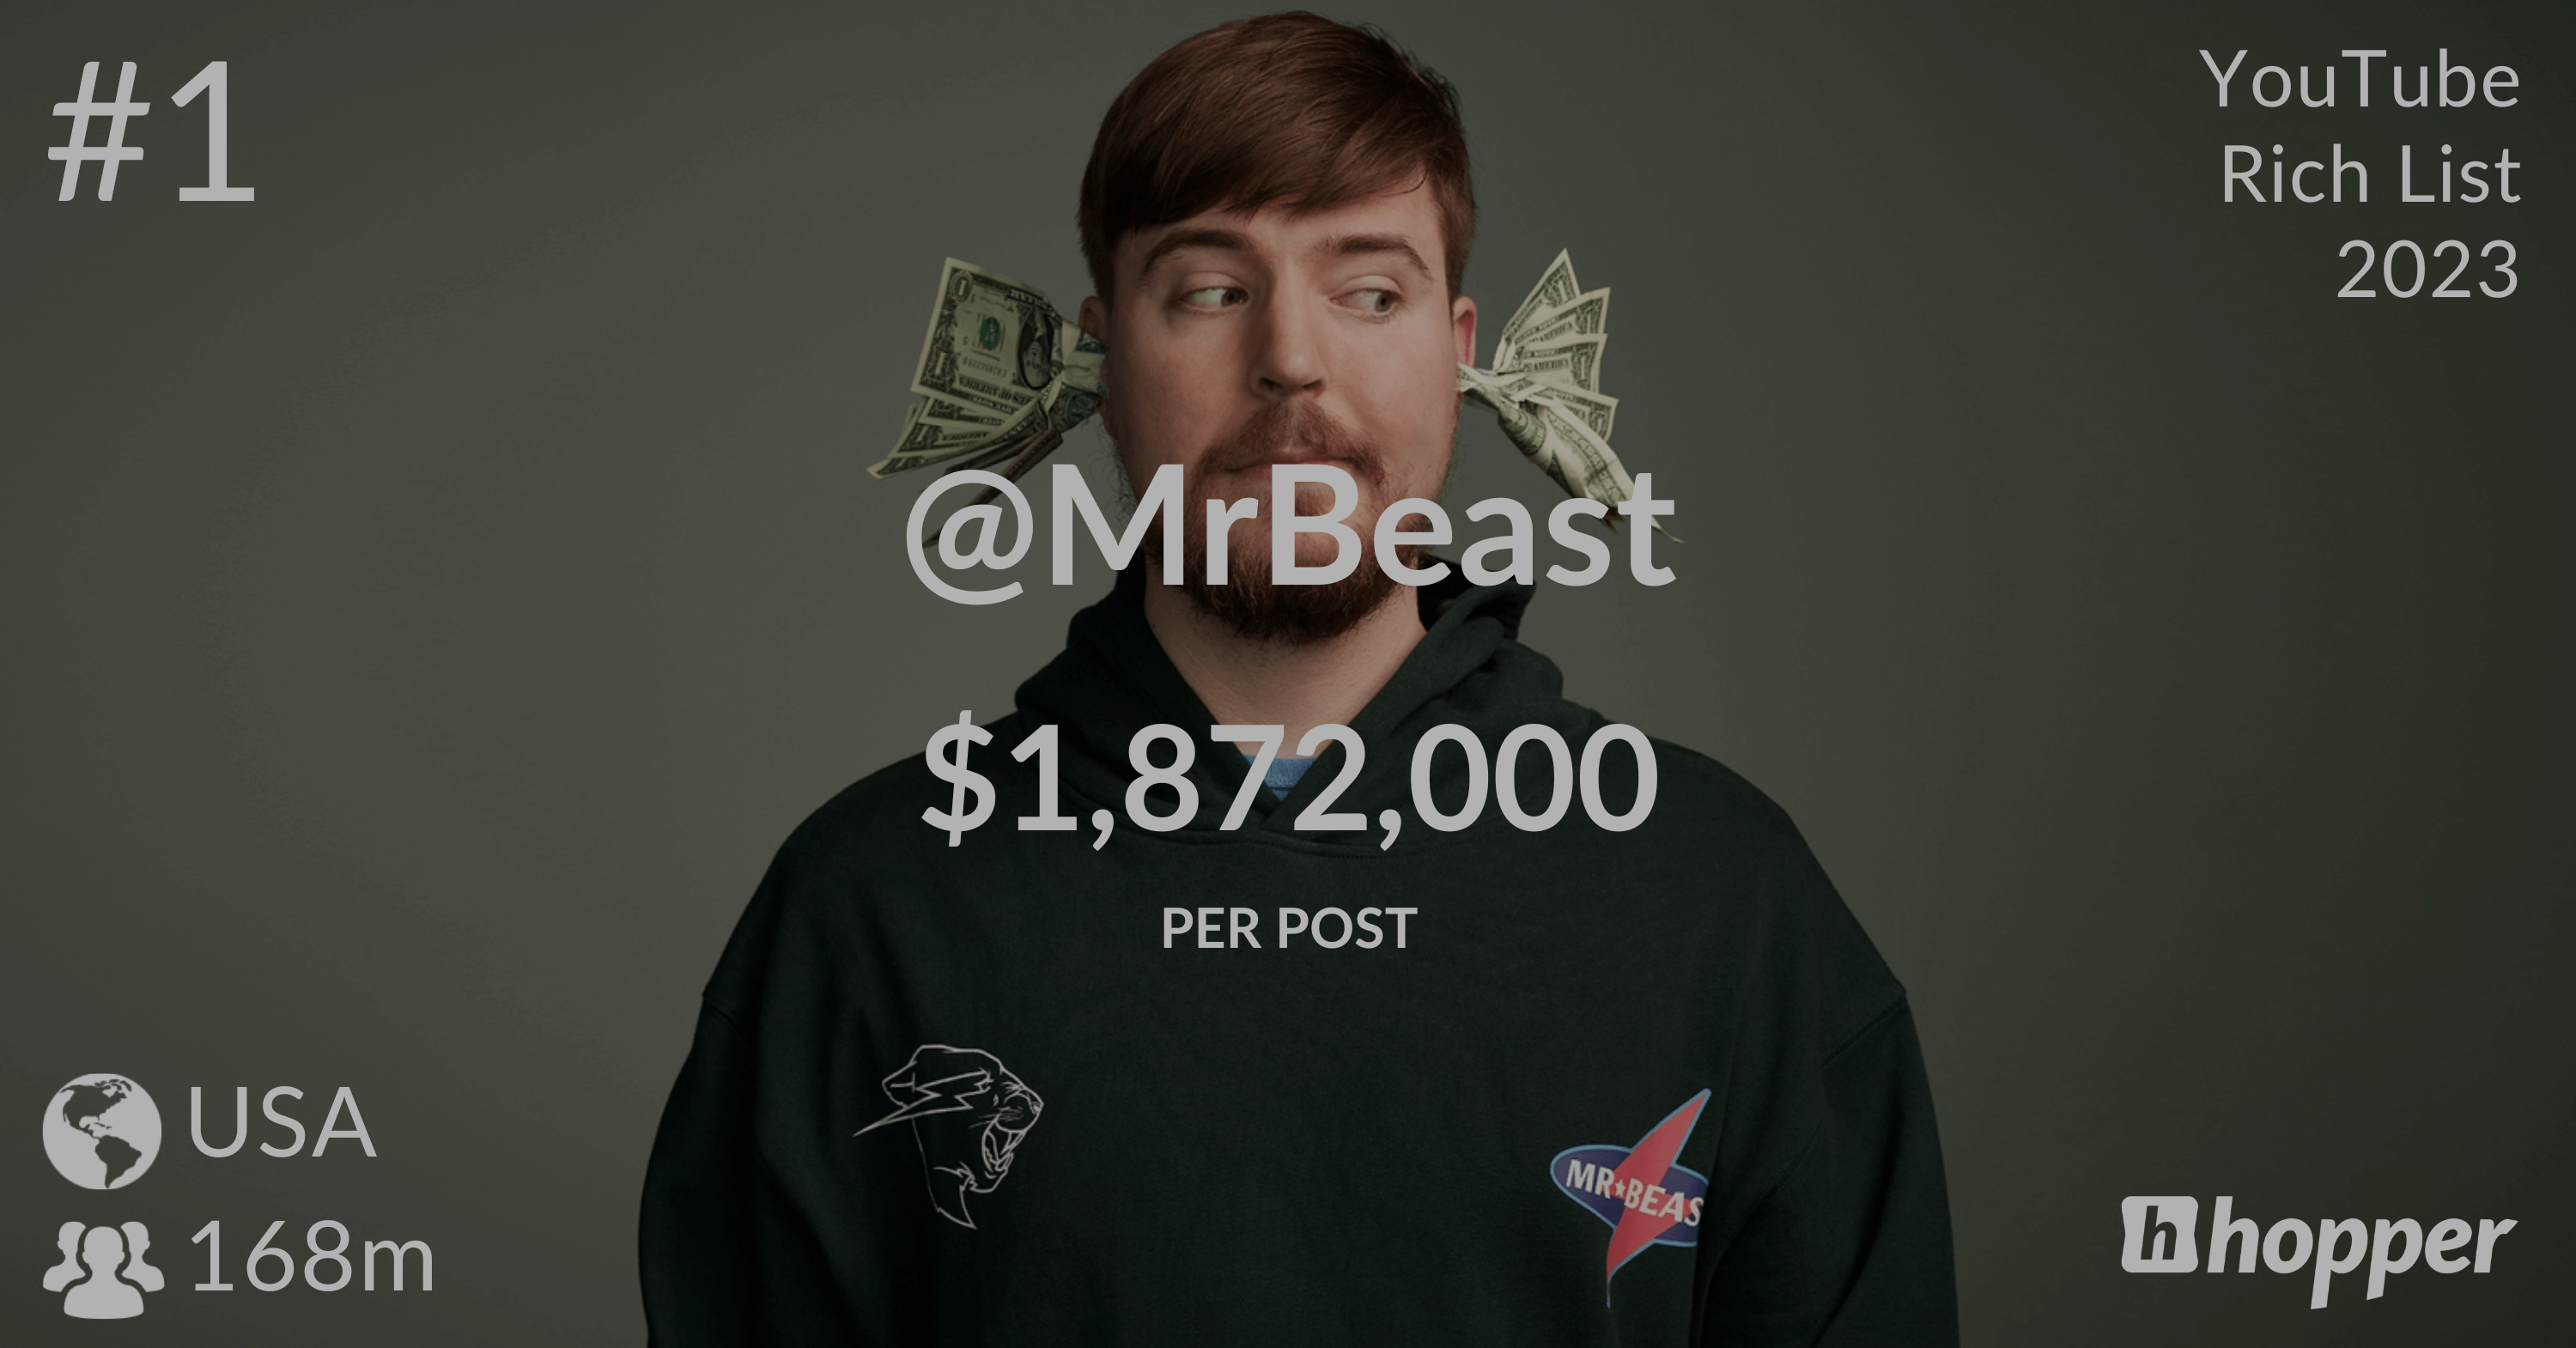 MrBeast Net Worth 2023 - How Much is He Worth? - FotoLog